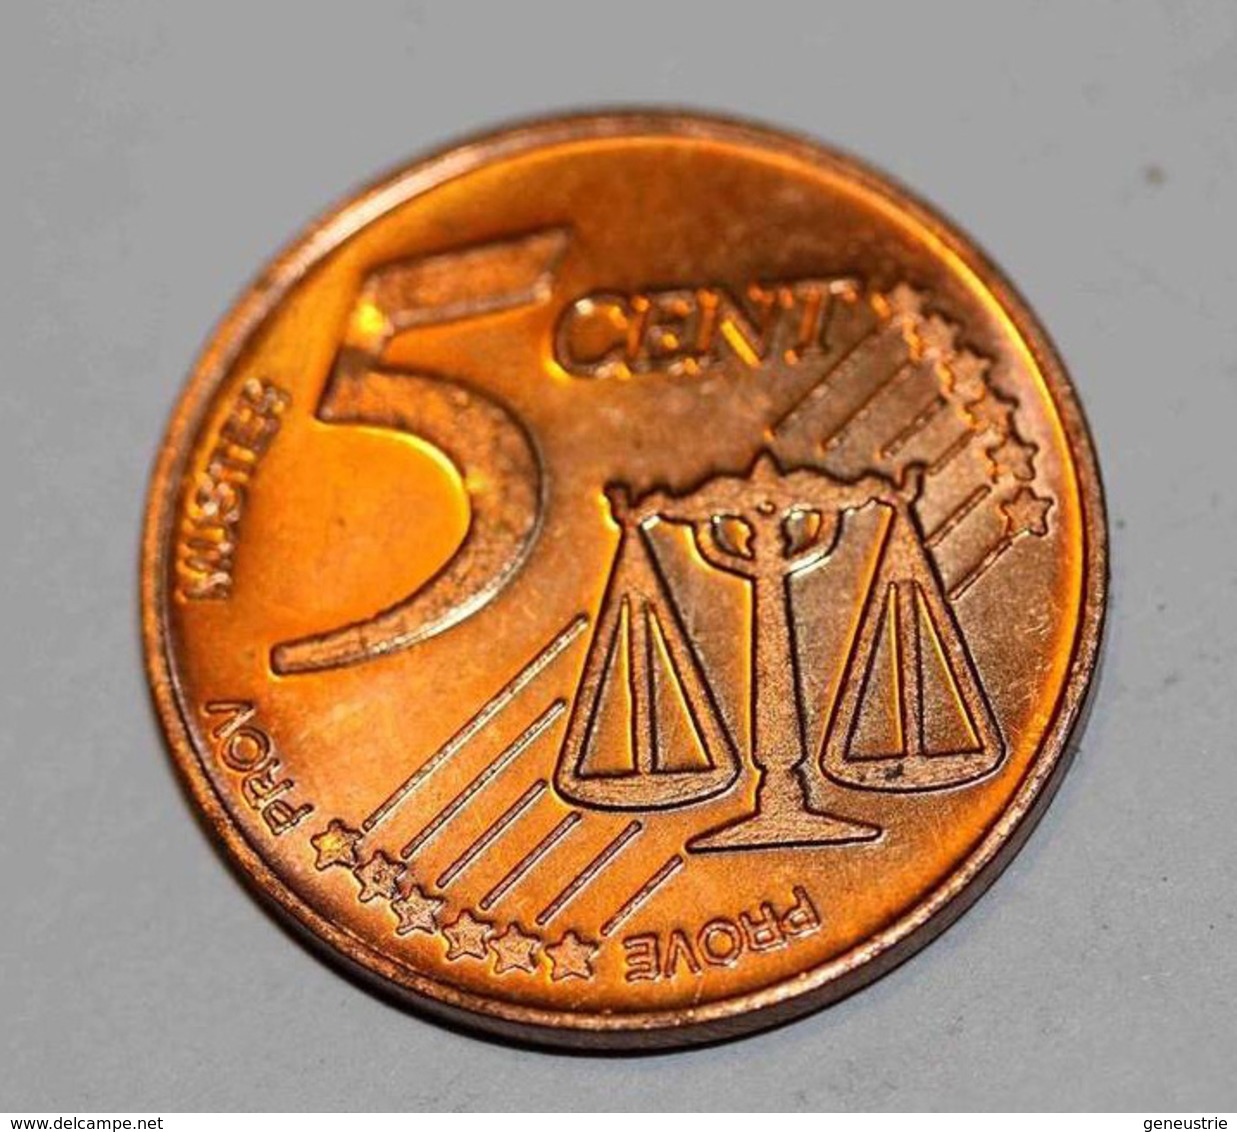 Wales - Pays De Galles 2004 BU EURO PATTERN EURO ESSAI 5 Cents - 5 Euro Cent - Prove Private